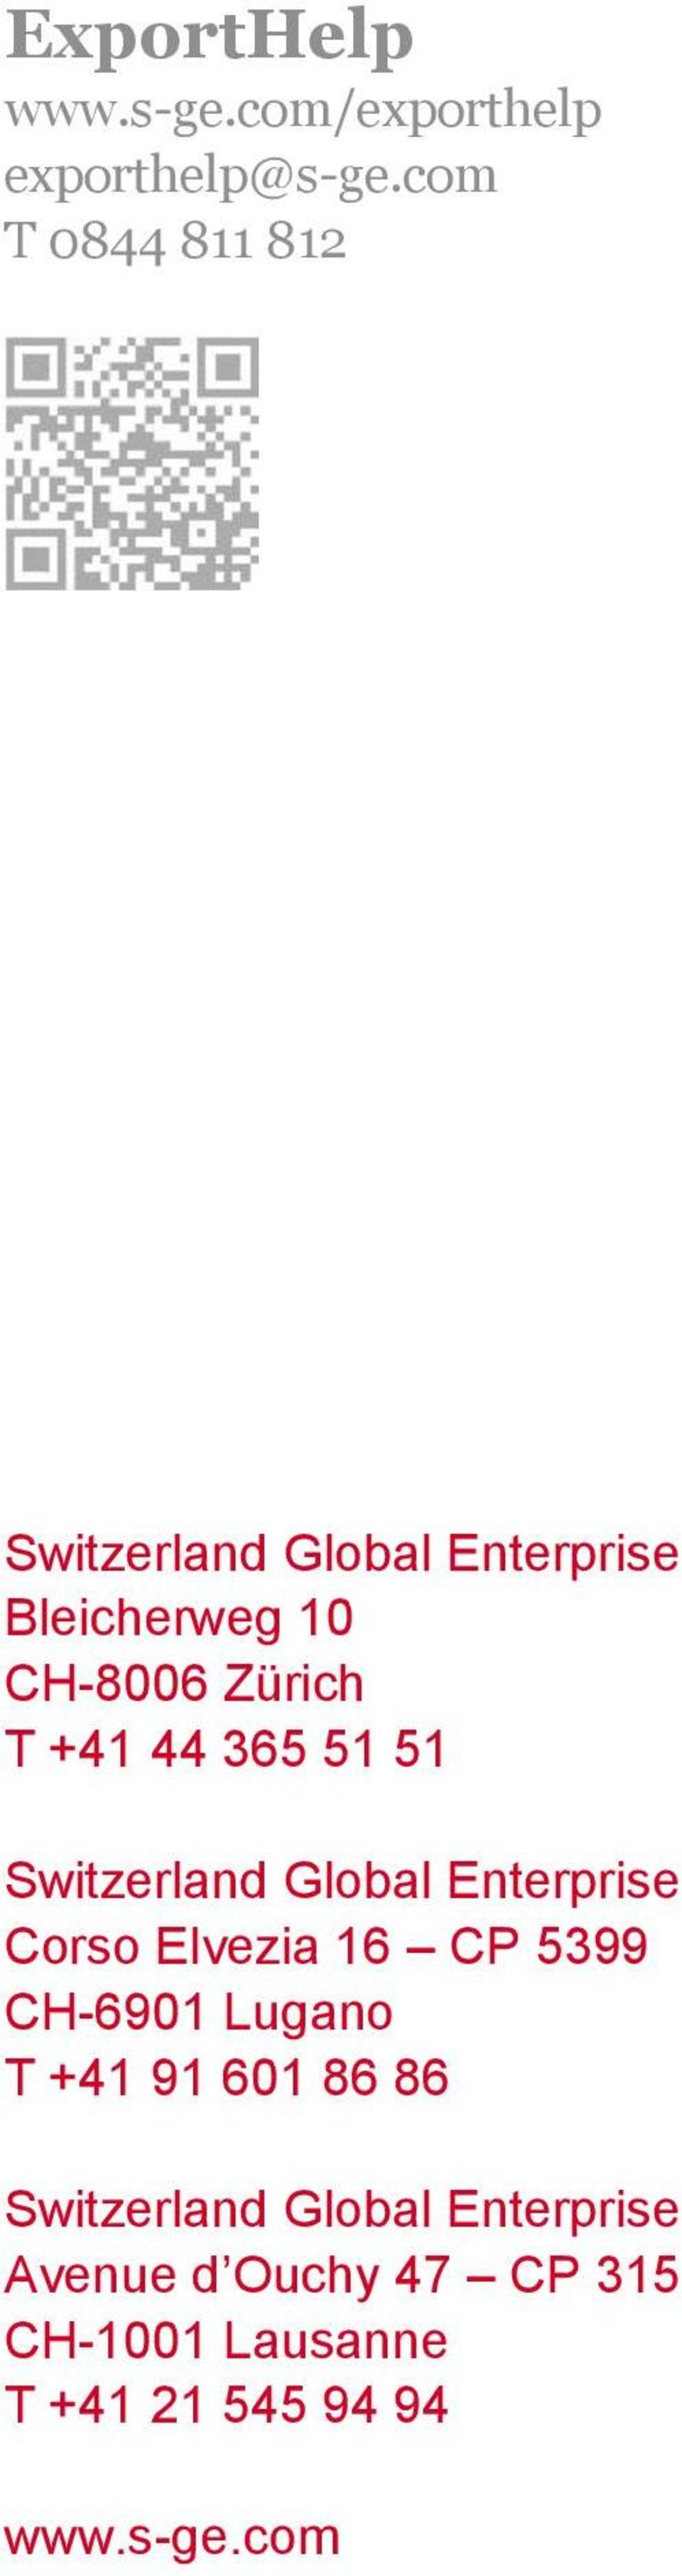 44 365 51 51 Switzerland Global Enterprise Corso Elvezia 16 CP 5399 CH-6901 Lugano T